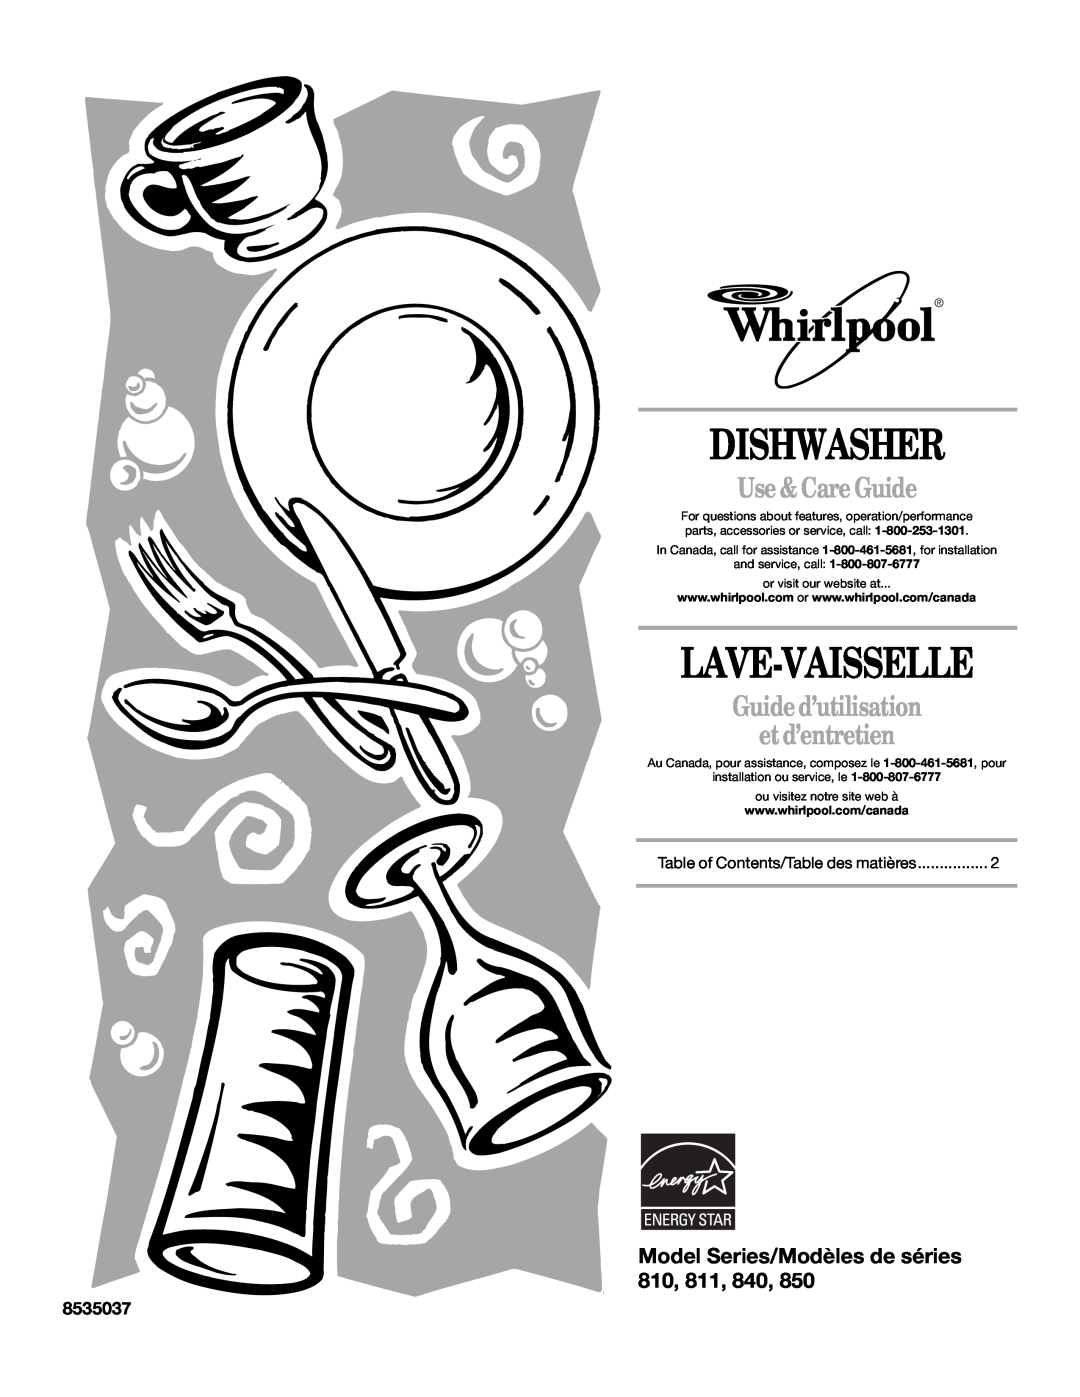 Whirlpool 810 manual Model Series/Modèles de séries, 8535037, Dishwasher, Lave-Vaisselle, Use & Care Guide 